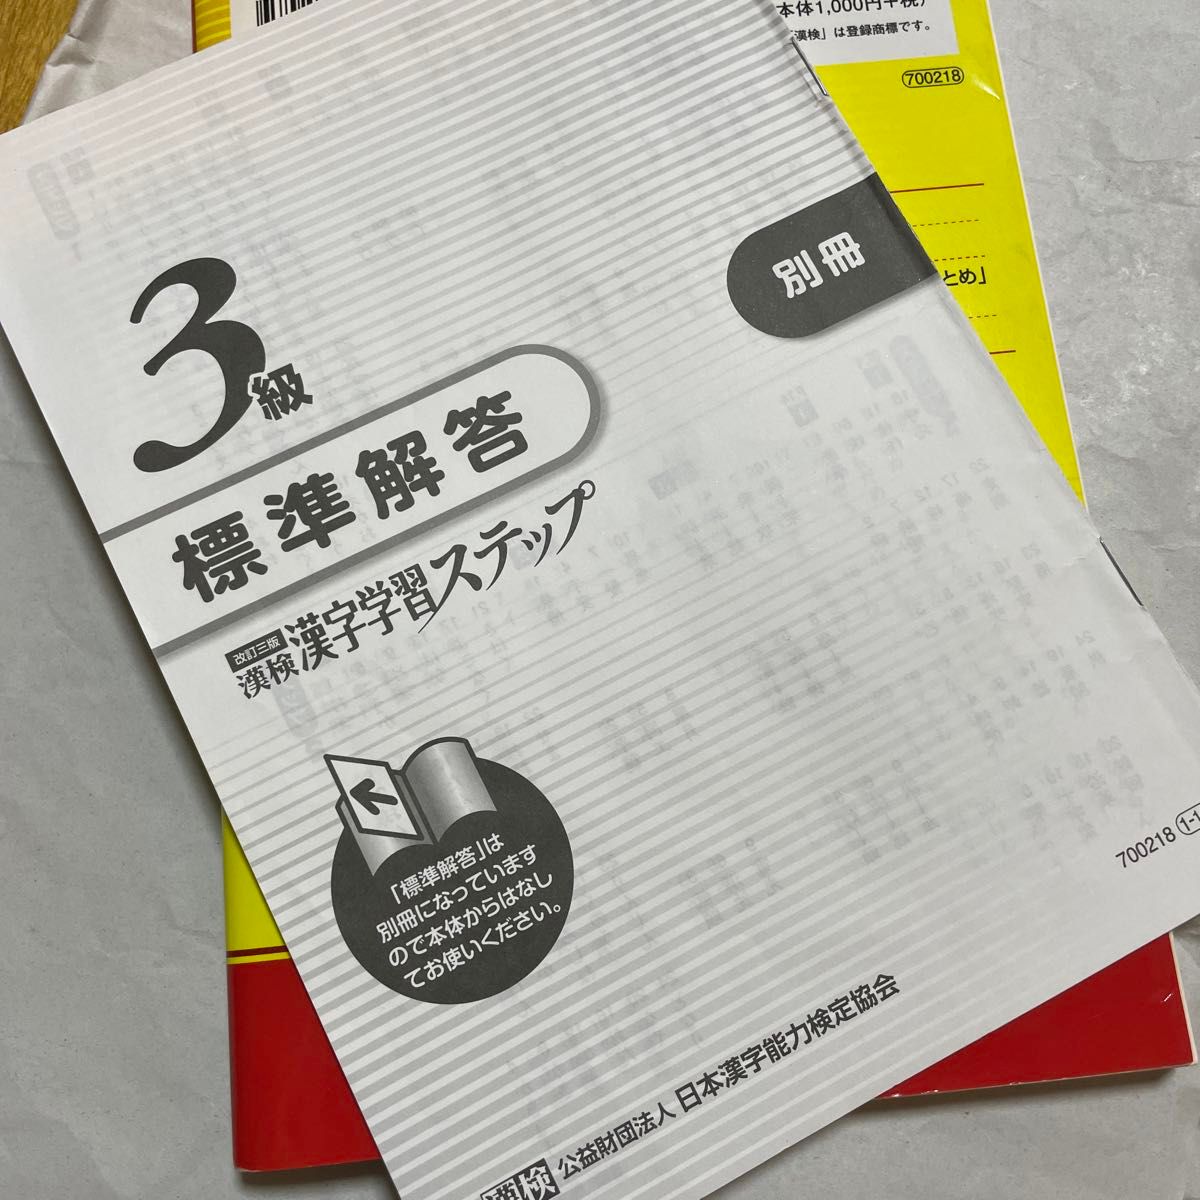 漢検3級漢字学習ステップ 改訂三版